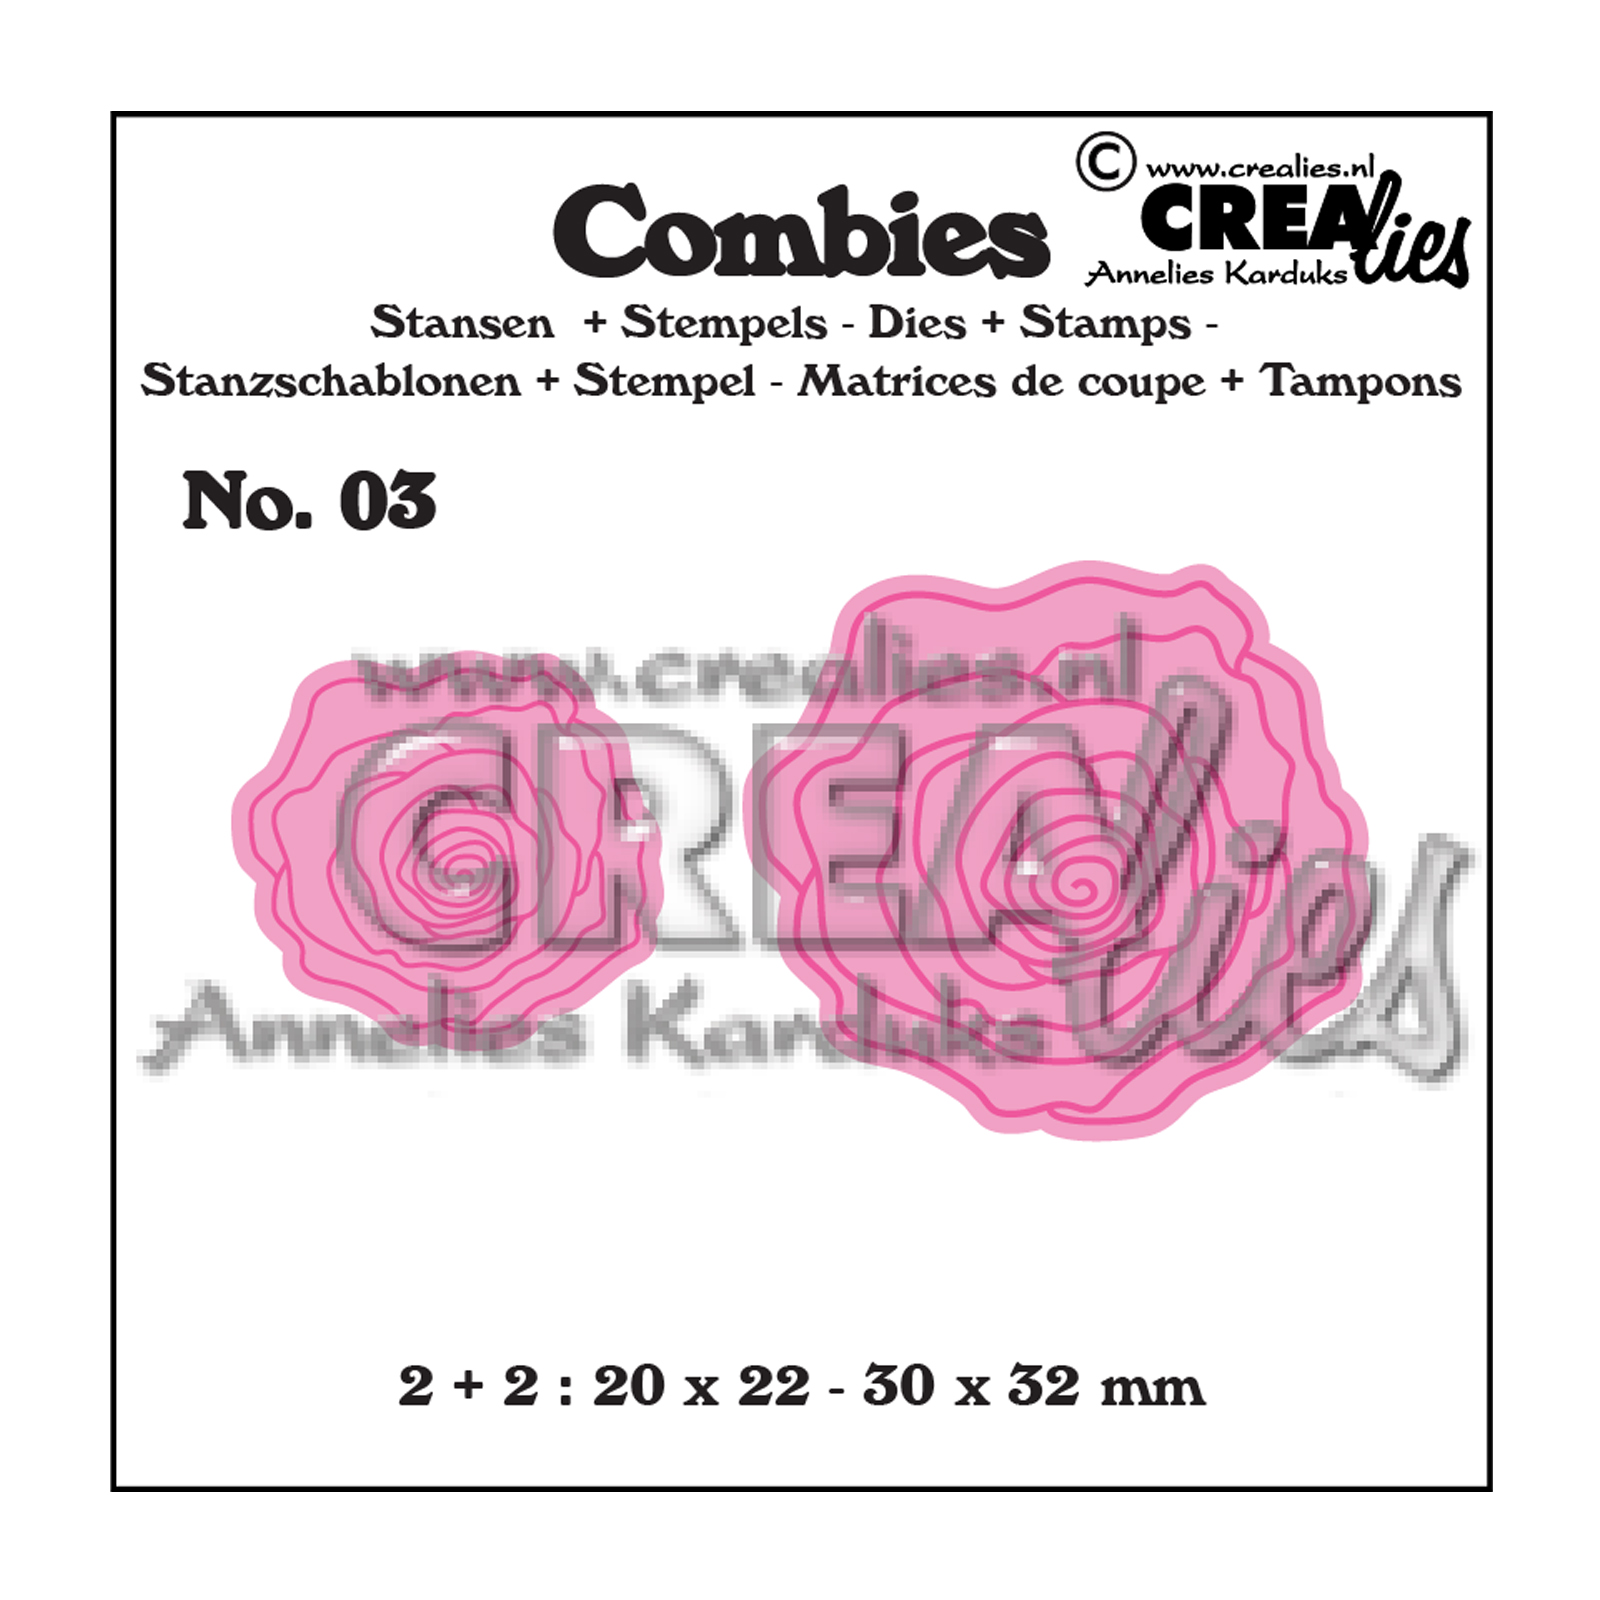 Crealies • Combies plantilla de corte & sello set no.03 Roses small